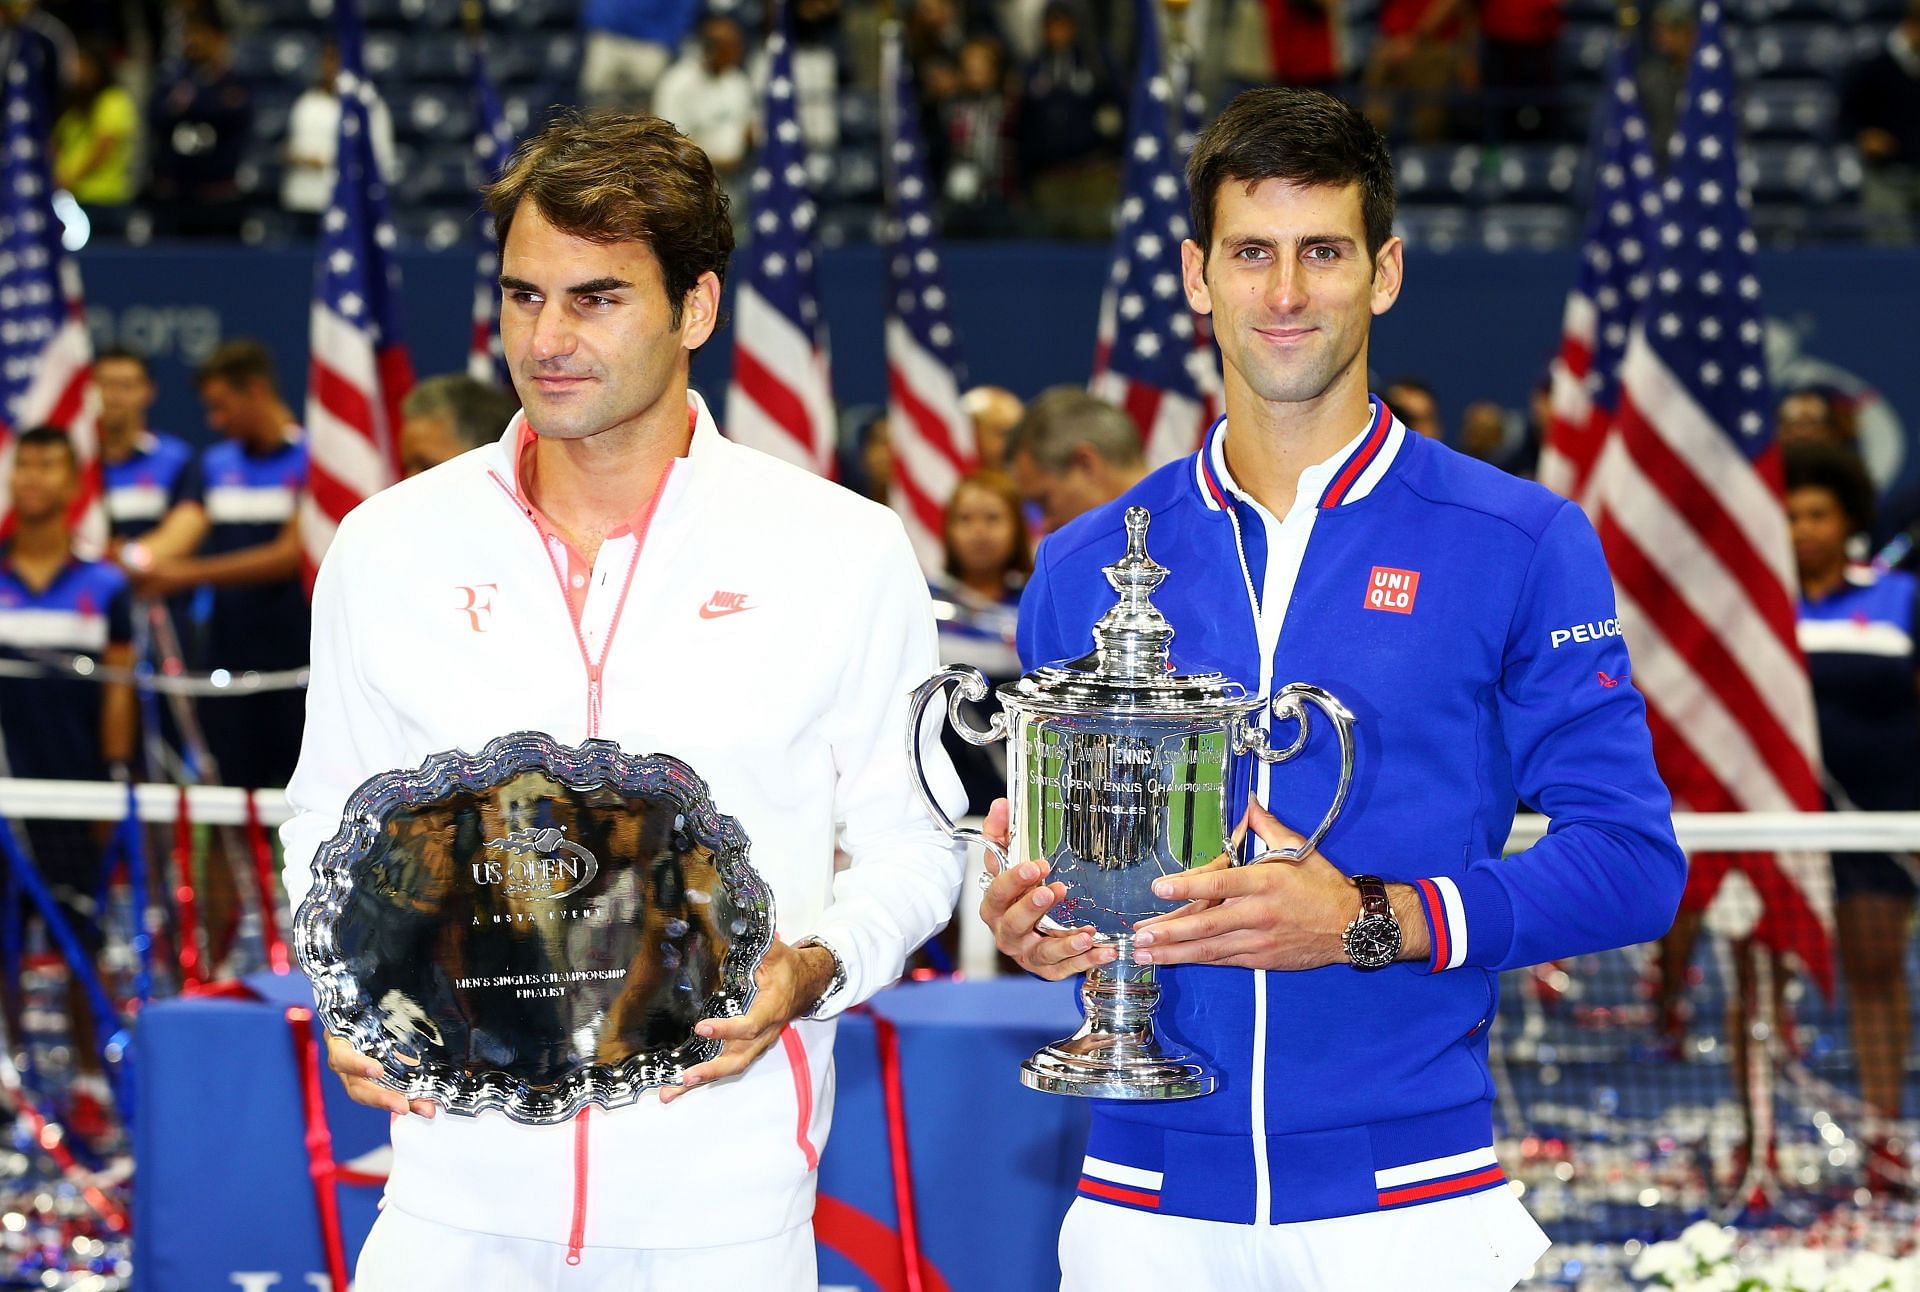 Roger Federer and Novak Djokovic after the 2015 U.S. Open final